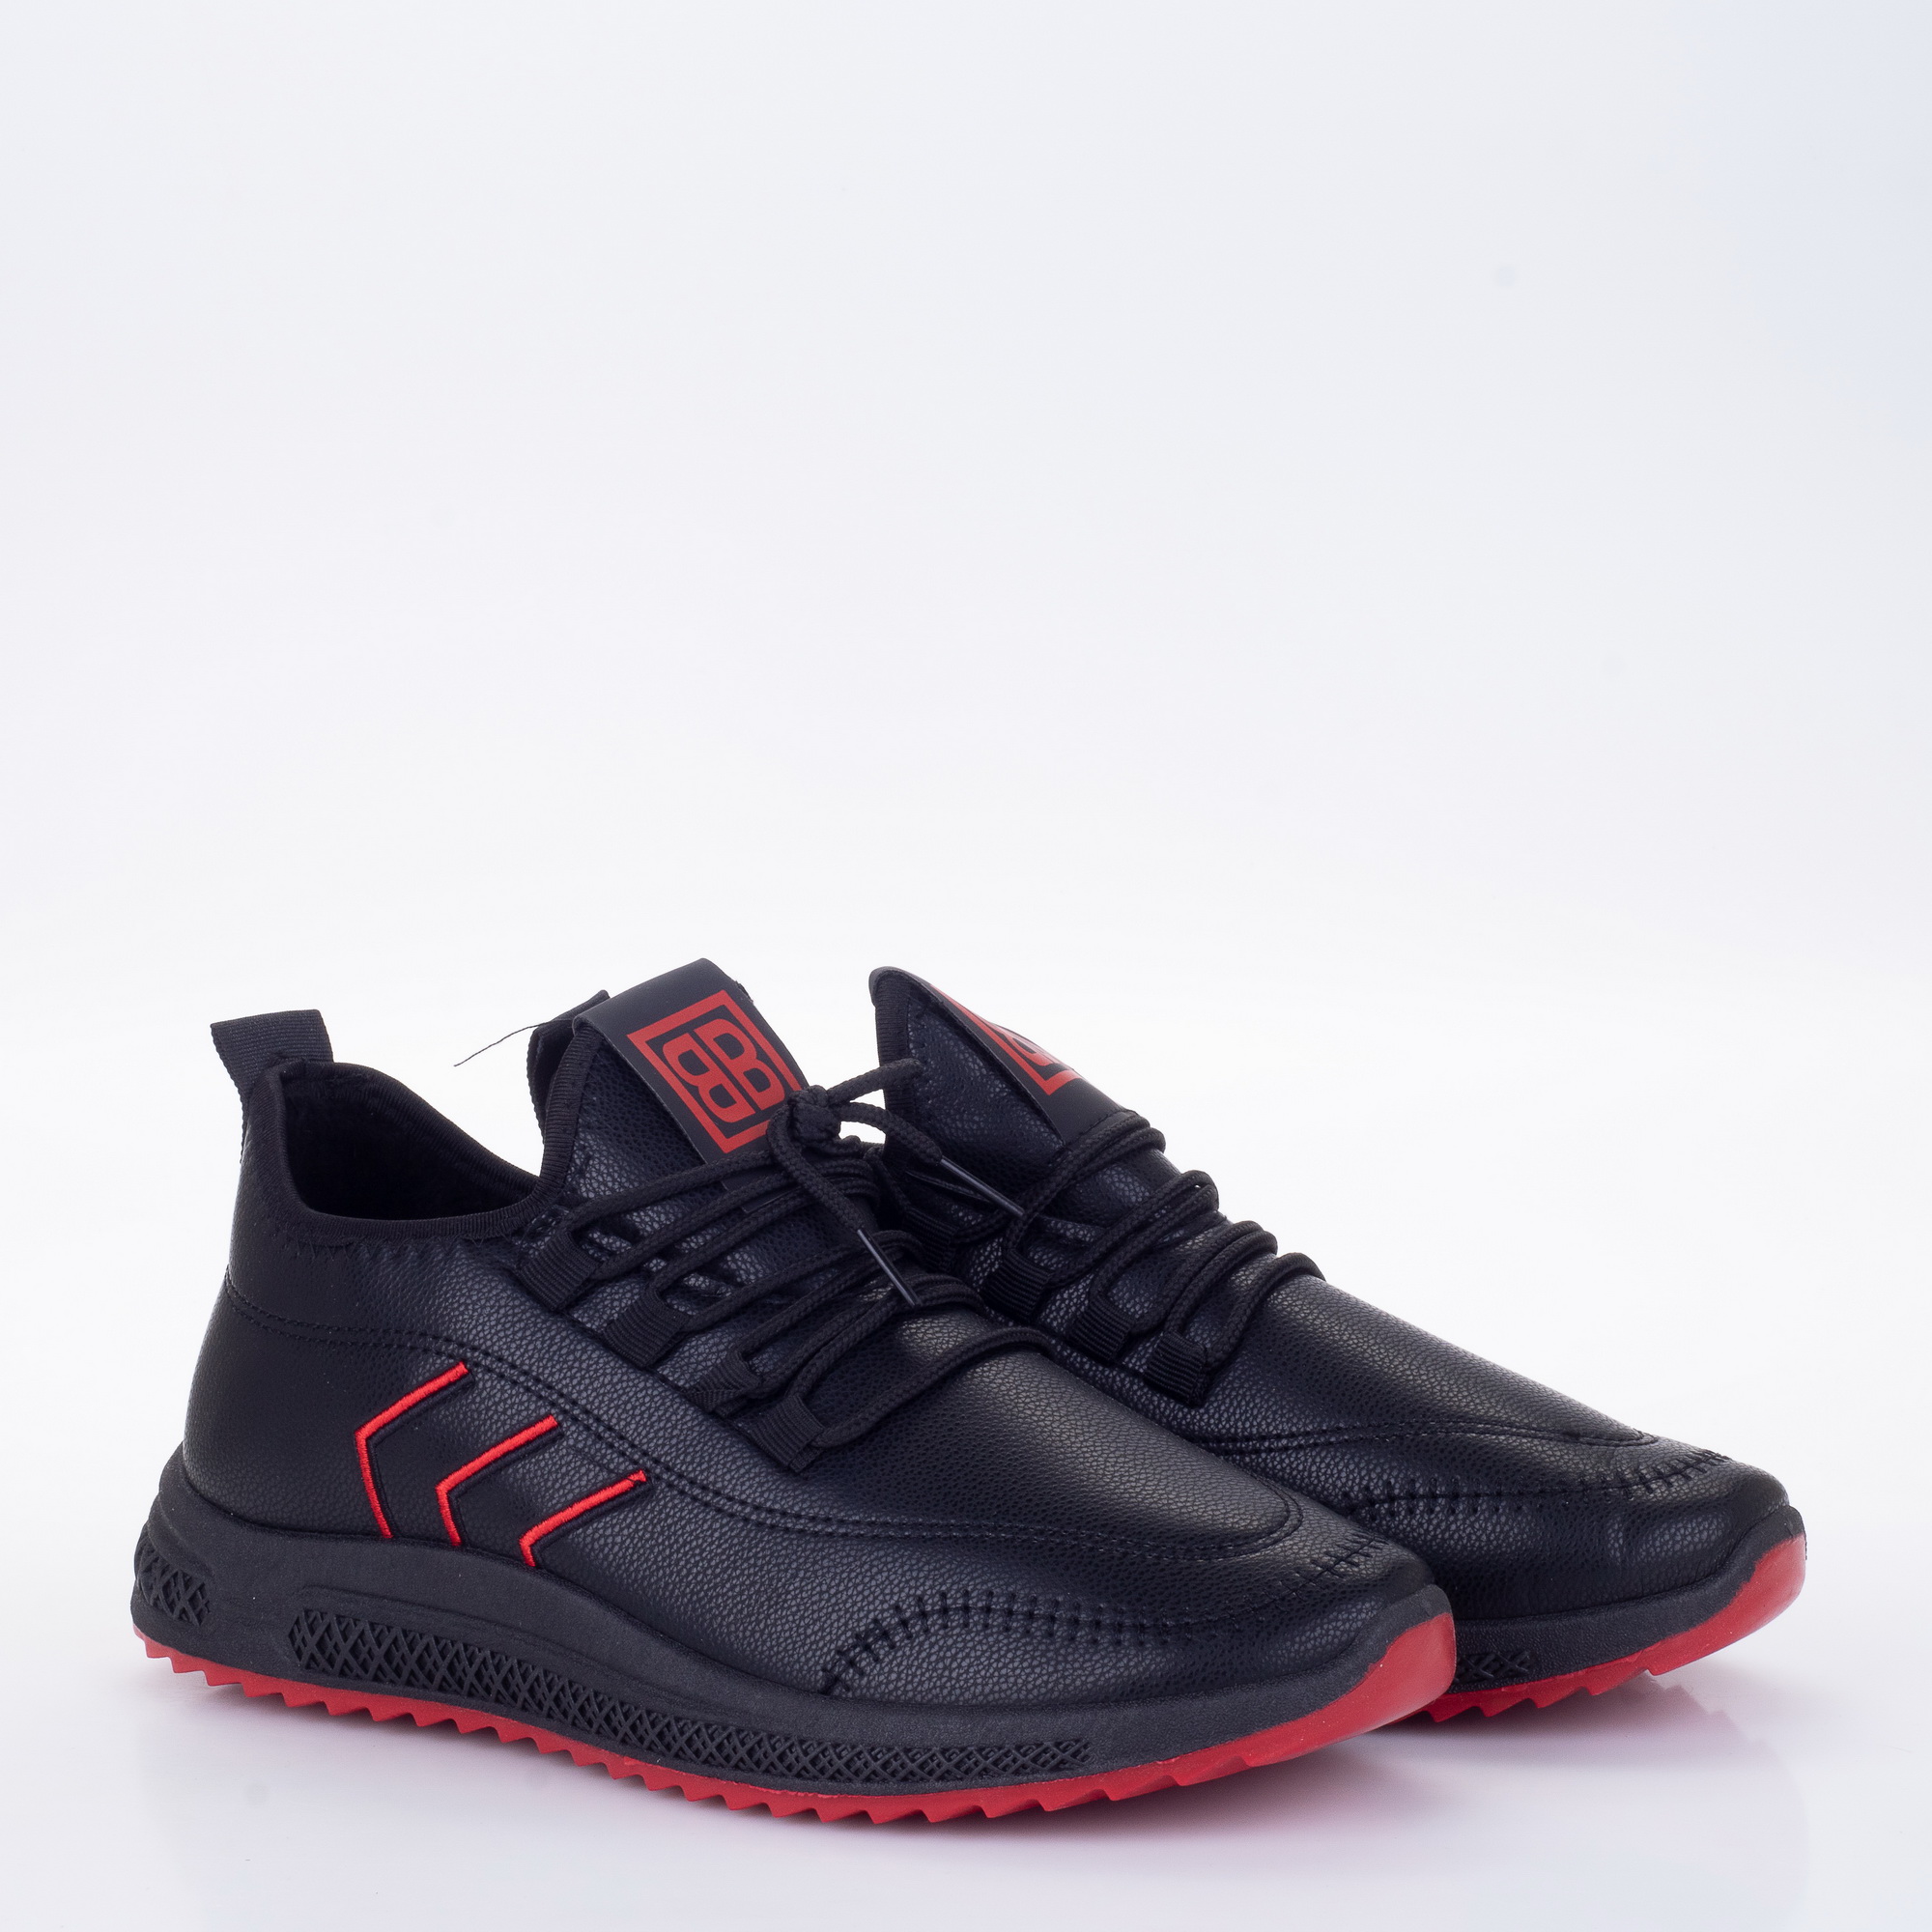 Фото Кроcсовки мужские J11 black/red купить на lauf.shoes